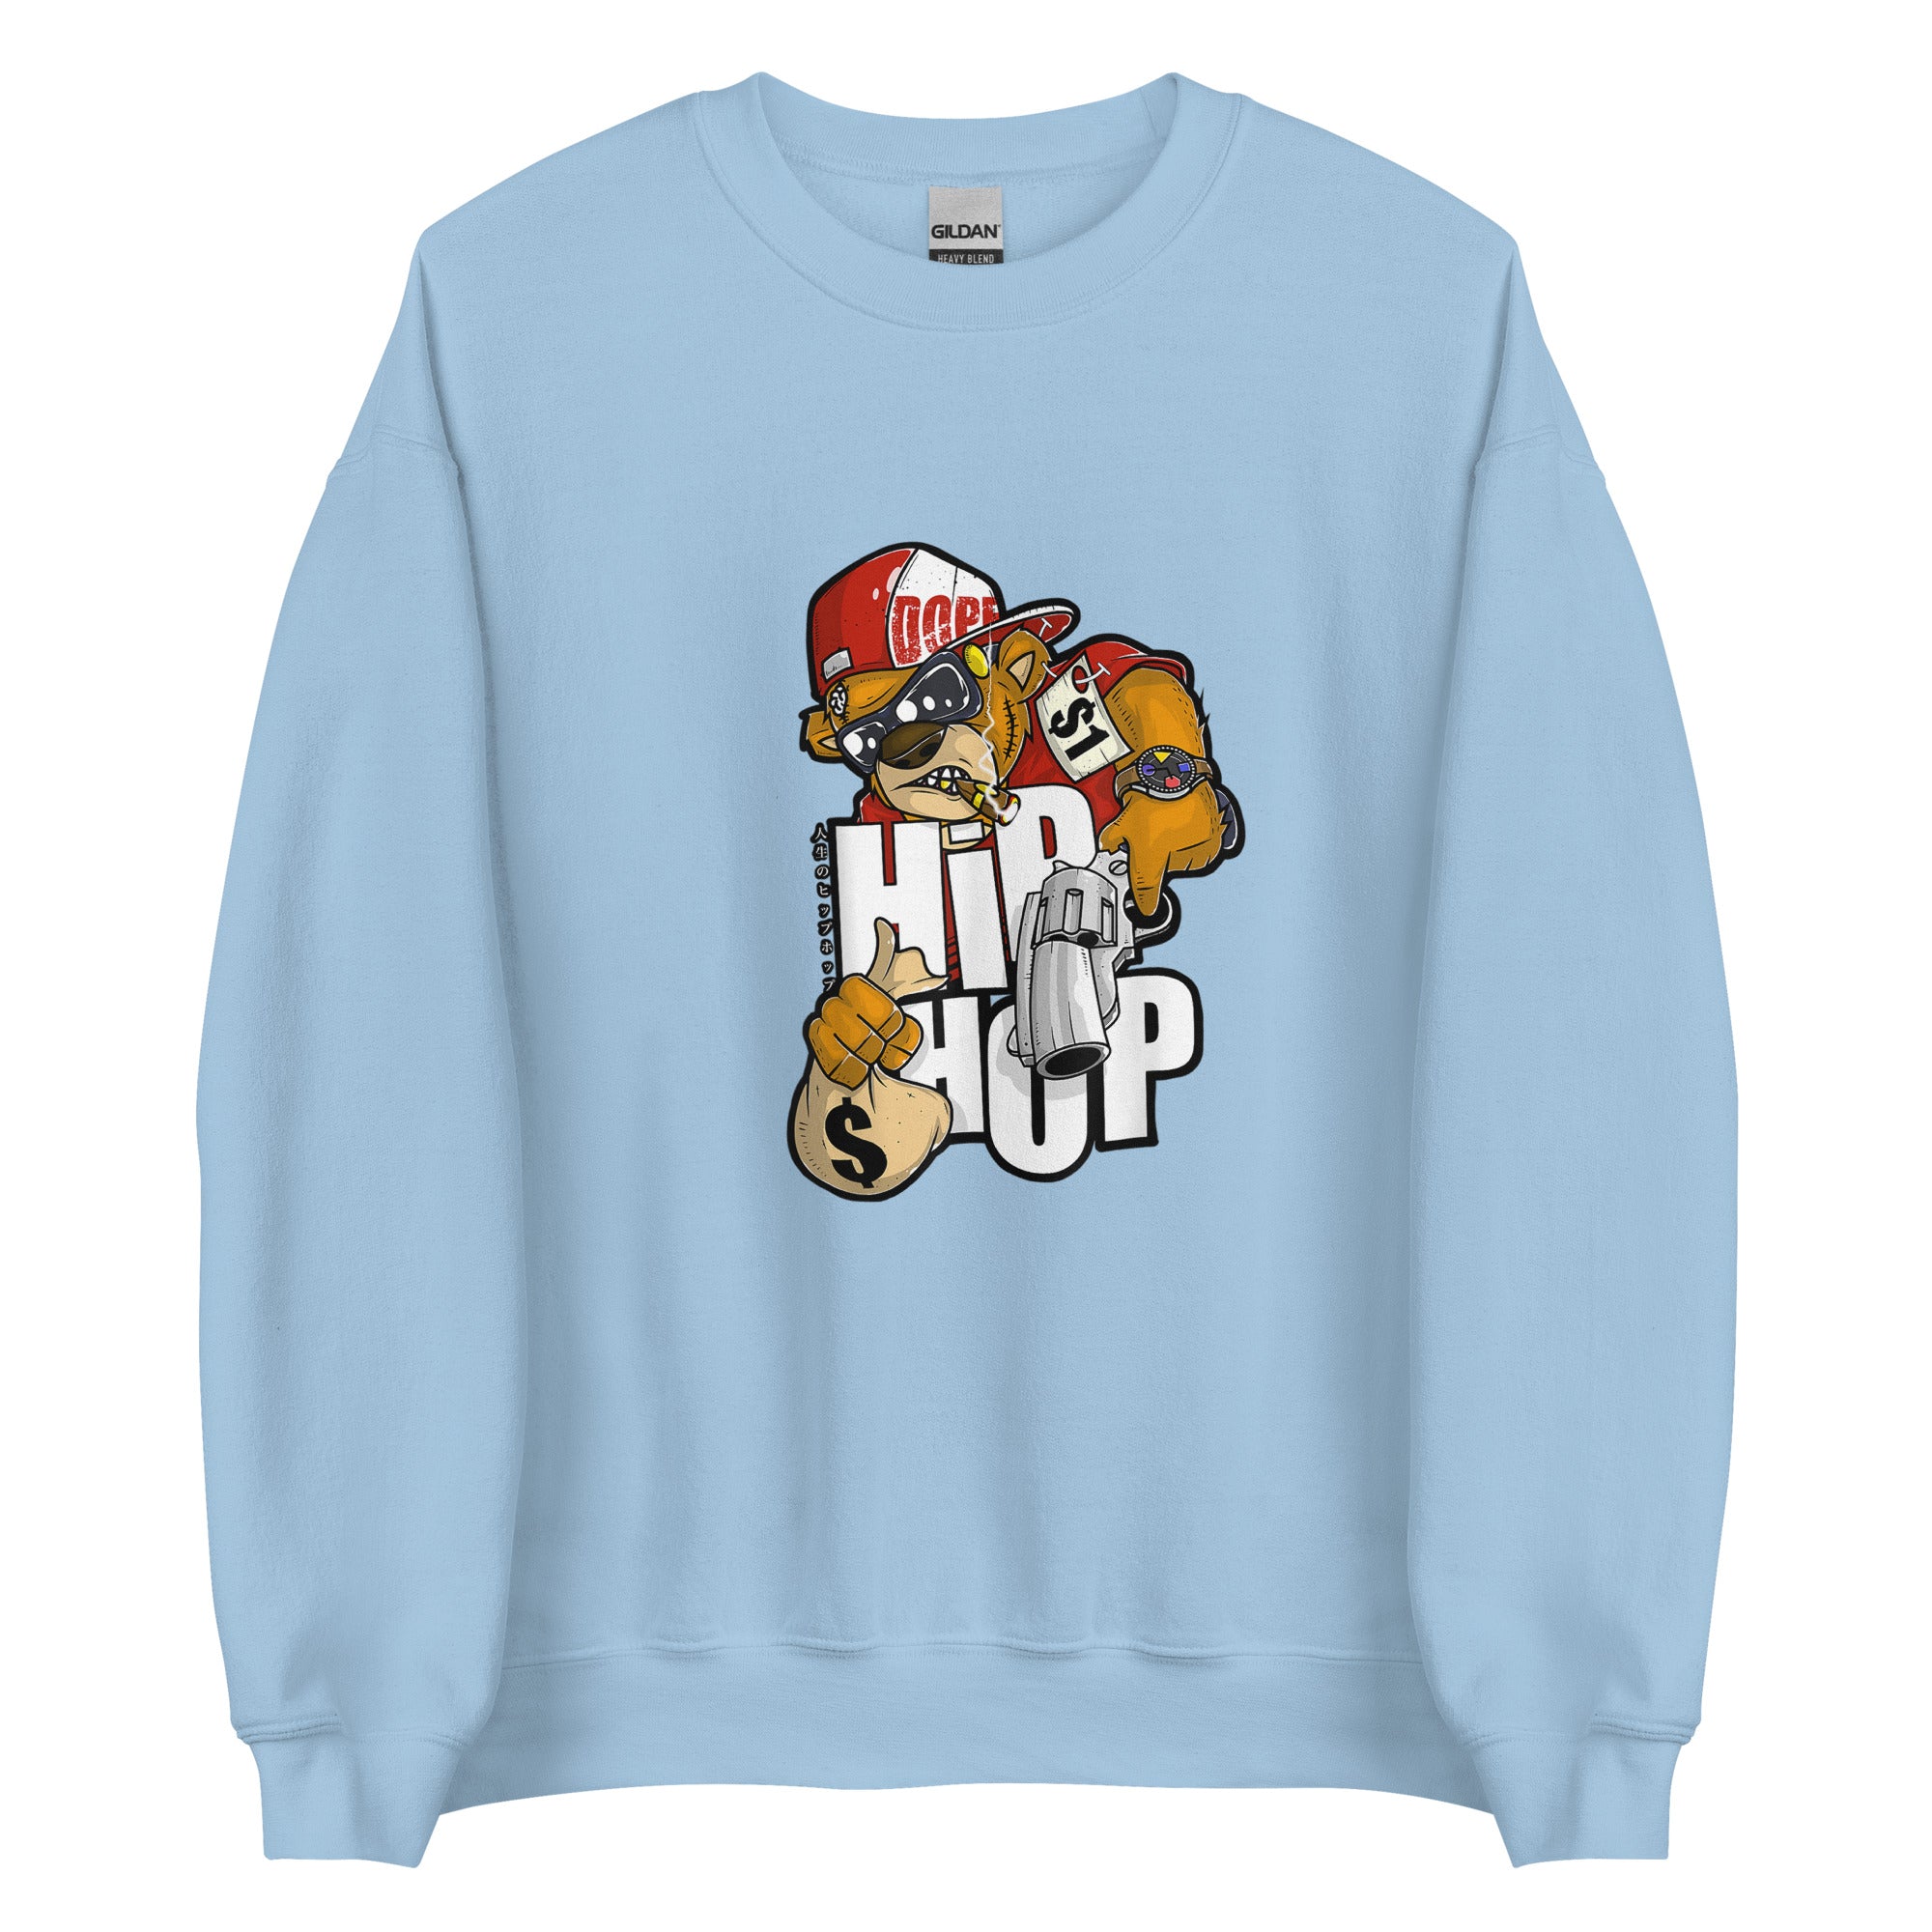 TEDDY BEAR HUSTLE HIP HOP Unisex Sweatshirt